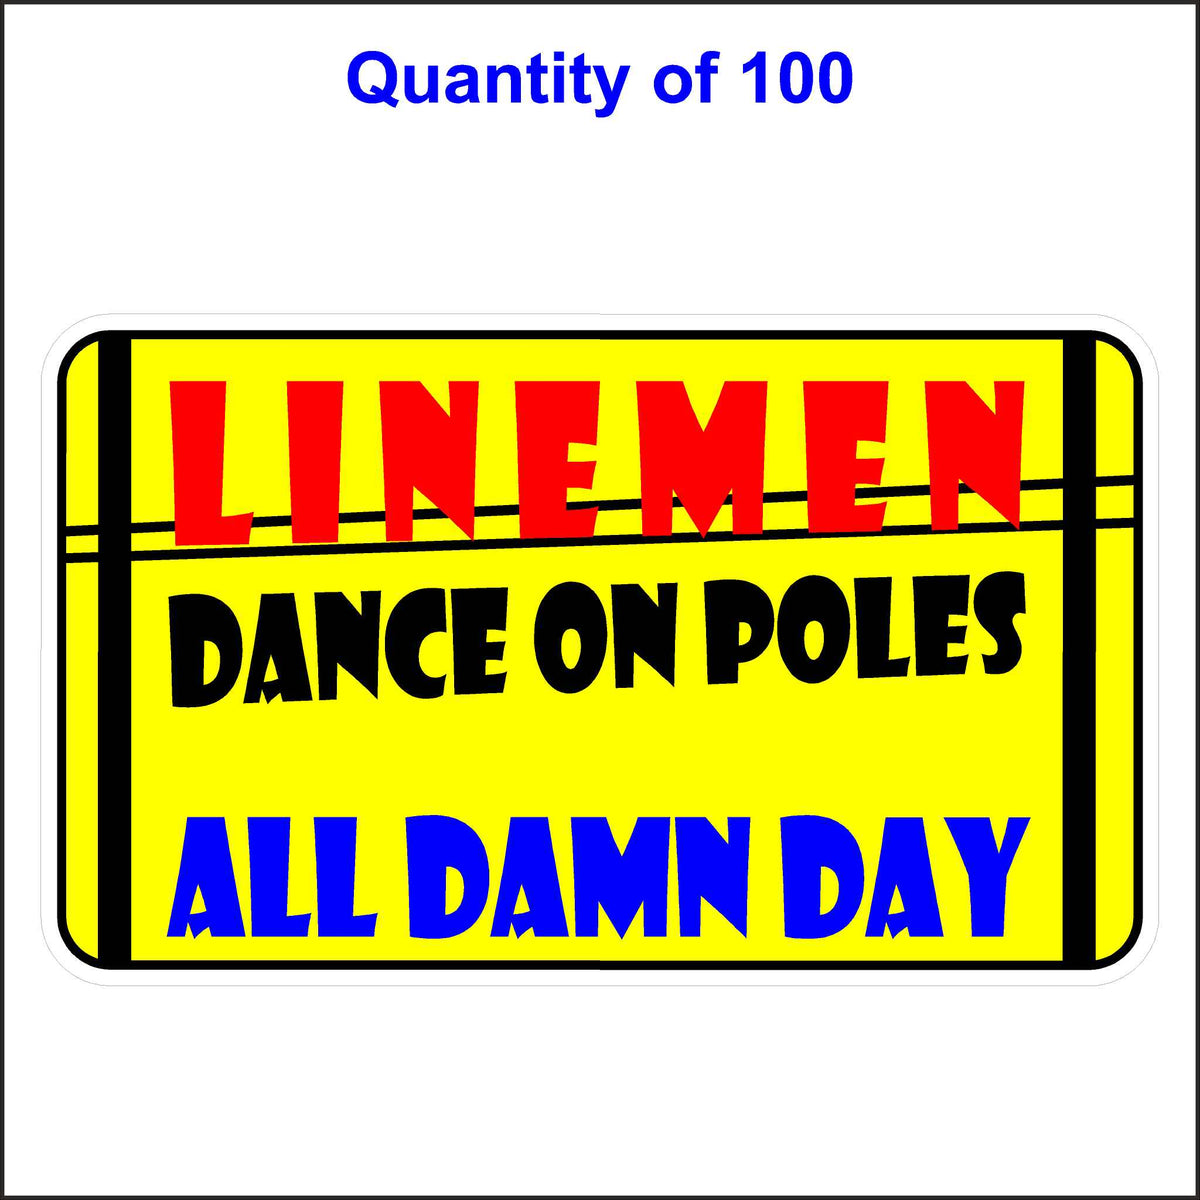 Lineman Dance on Poles All Damn Day Sticker. 100 Quantity.